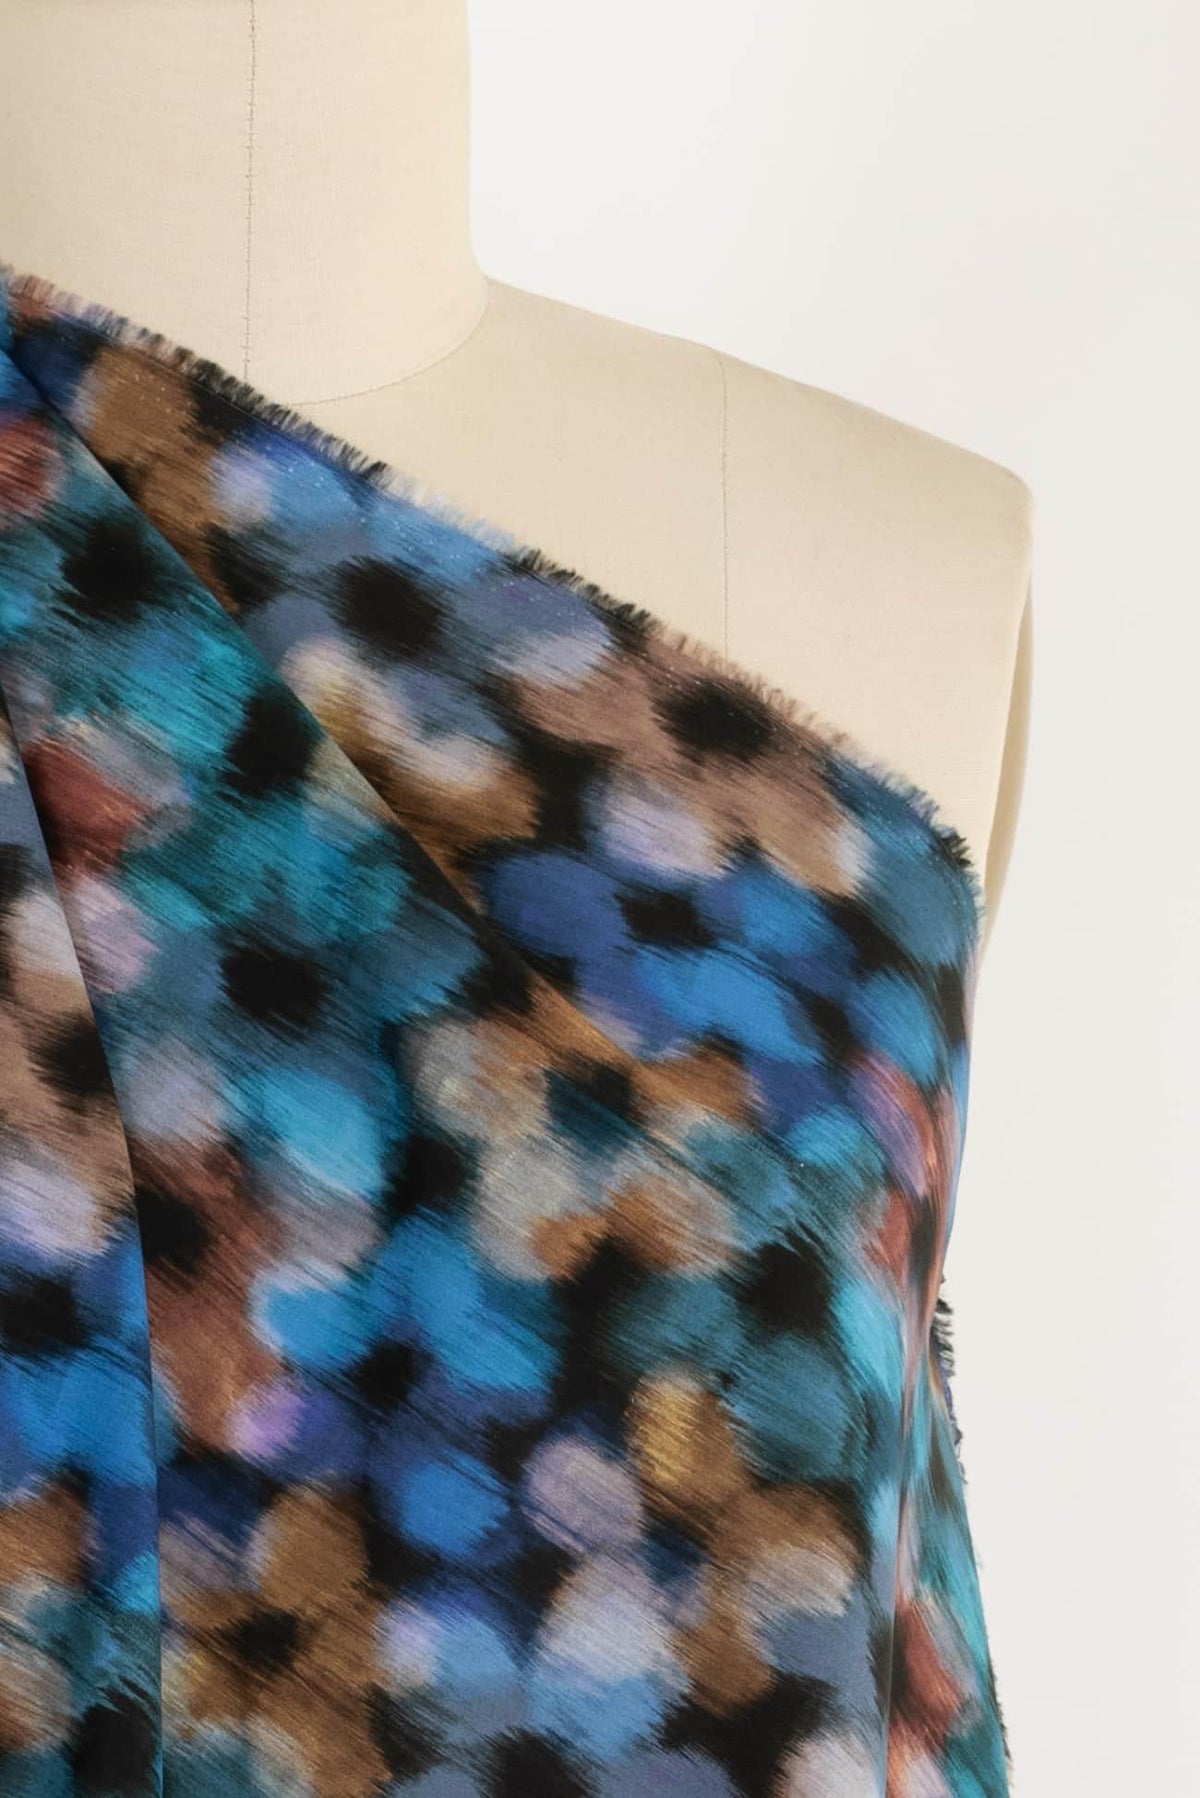 Edwina Liberty Cotton Woven - Marcy Tilton Fabrics